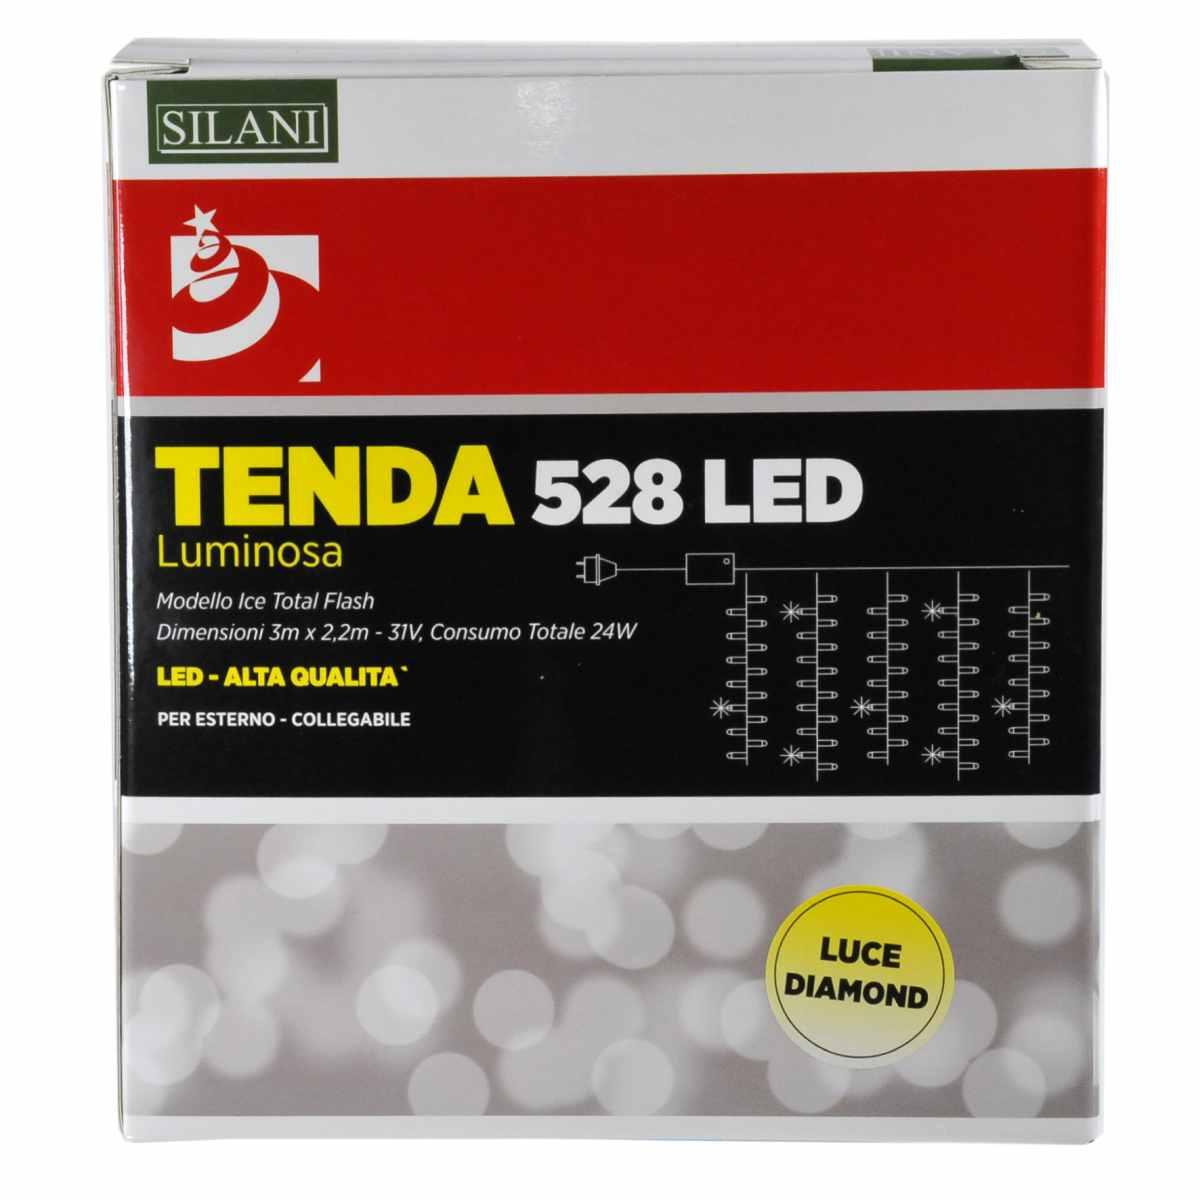 Luci Tenda 528 Led Bianco Diamond con Flash Led Prolungabili cm.300xh220